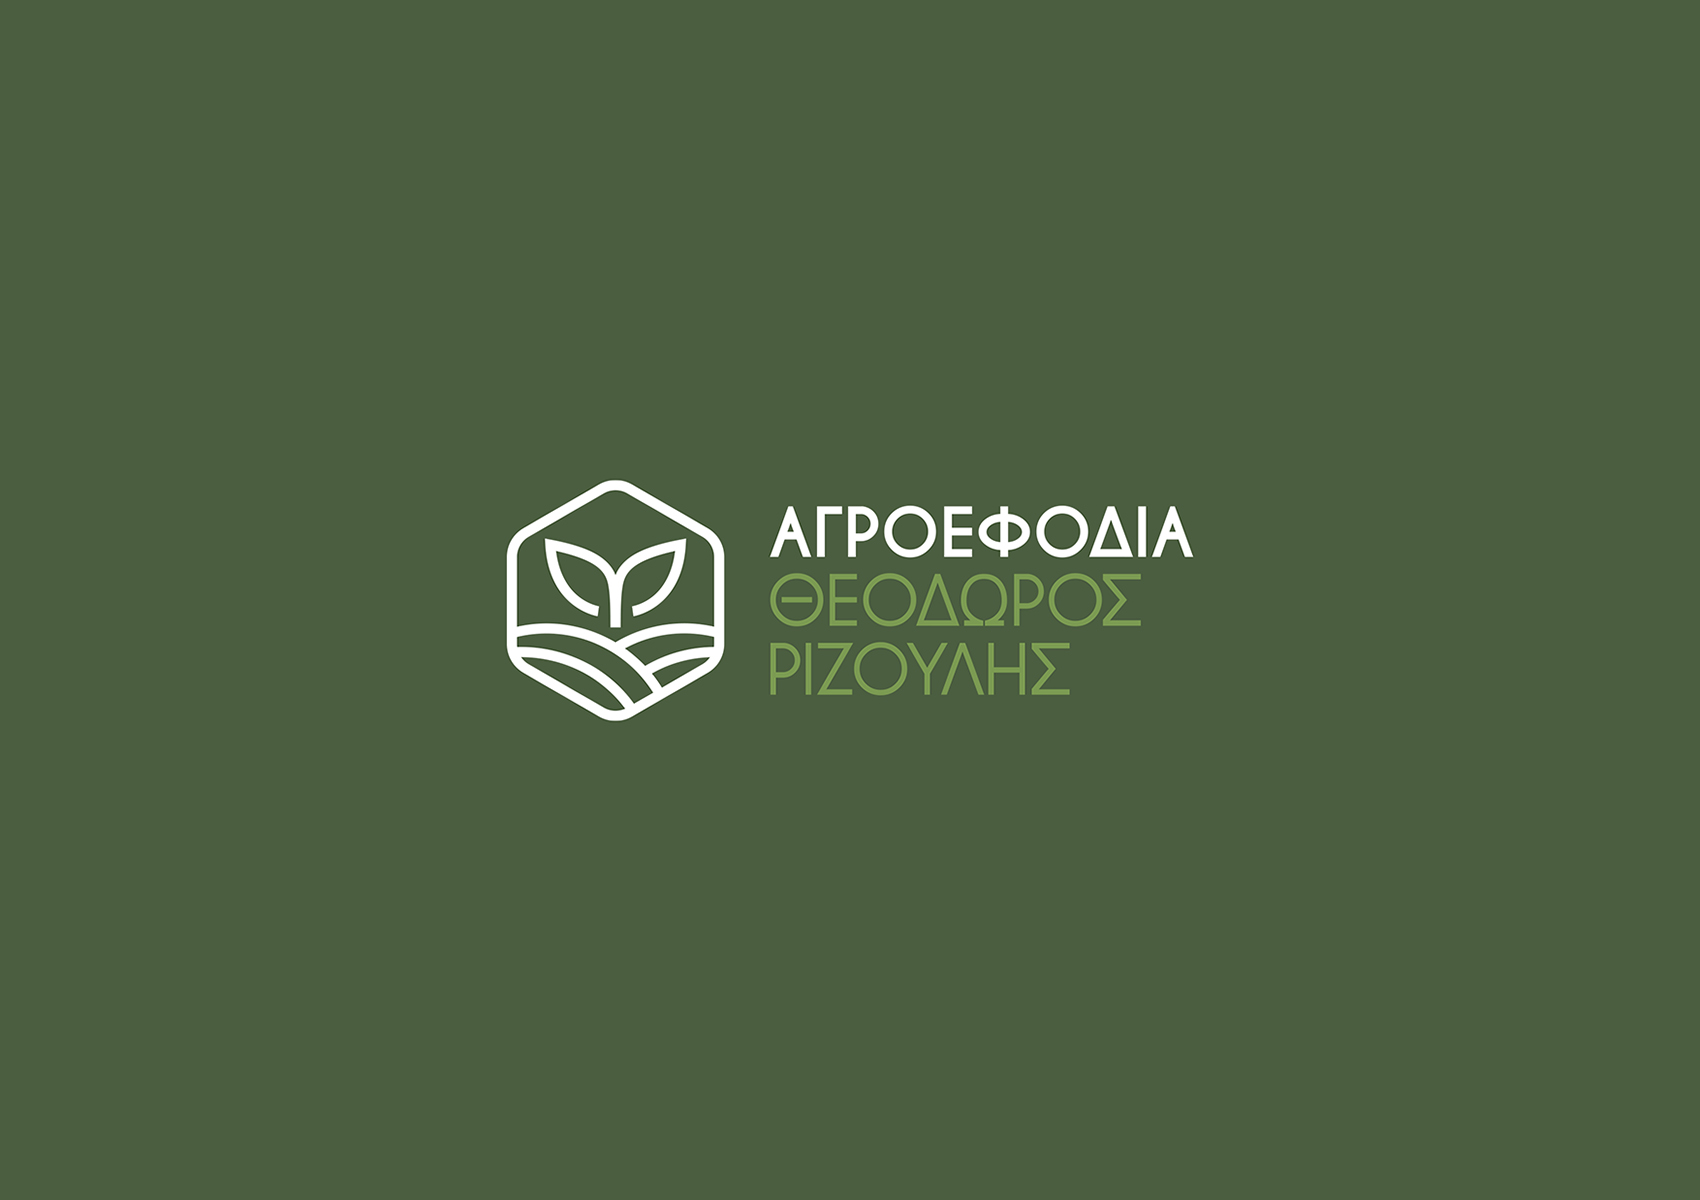 Agroefodia Rizoulis Logo green 1700x1200 by xhristakis